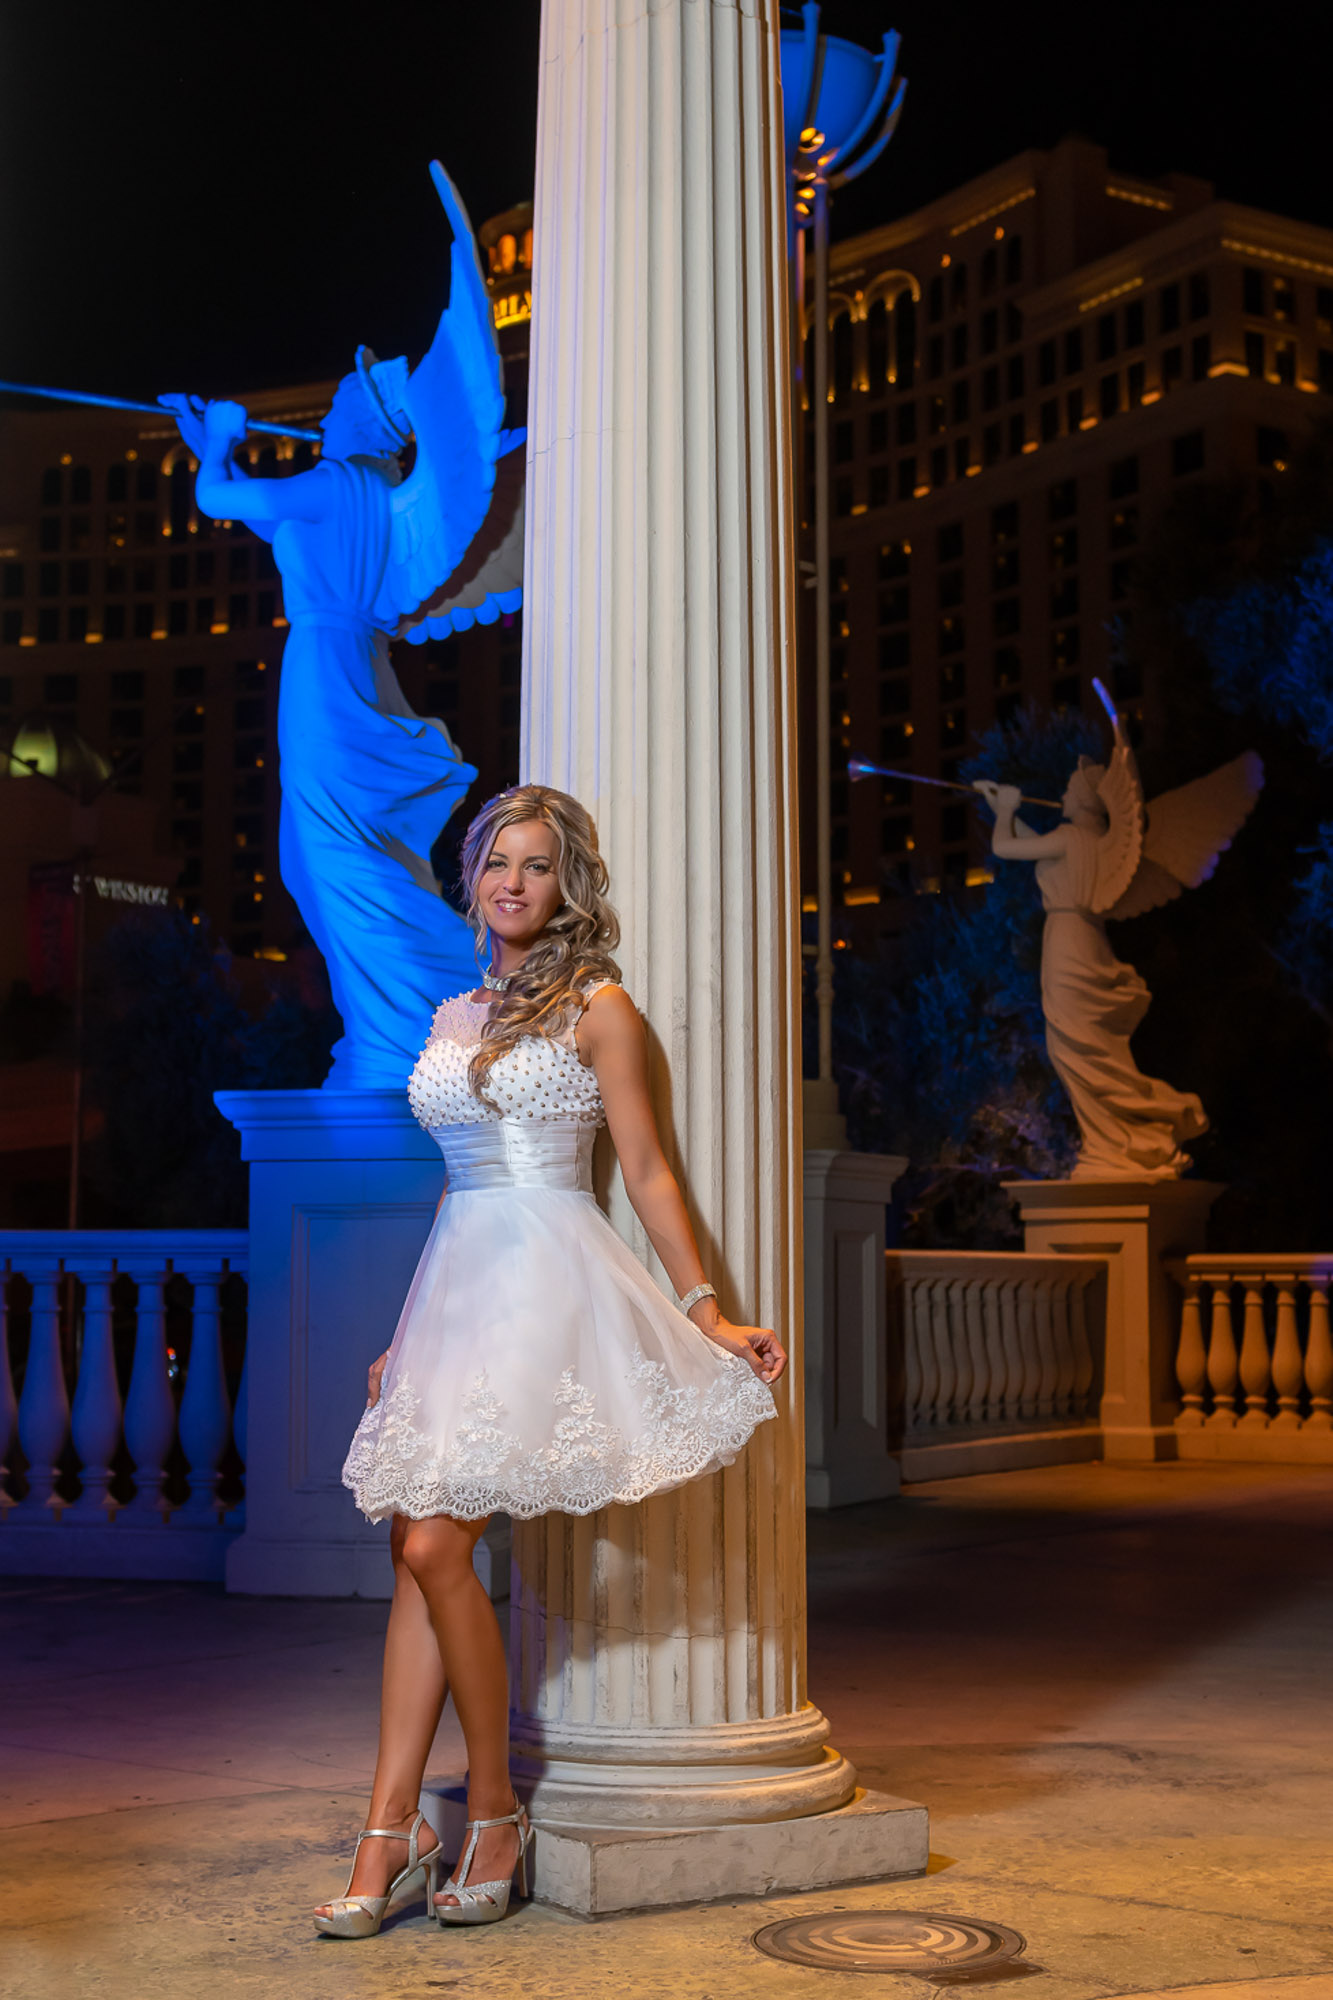 Wedding photographer Las Vegas strip | Vegas weddings | Agi and Szabolcs